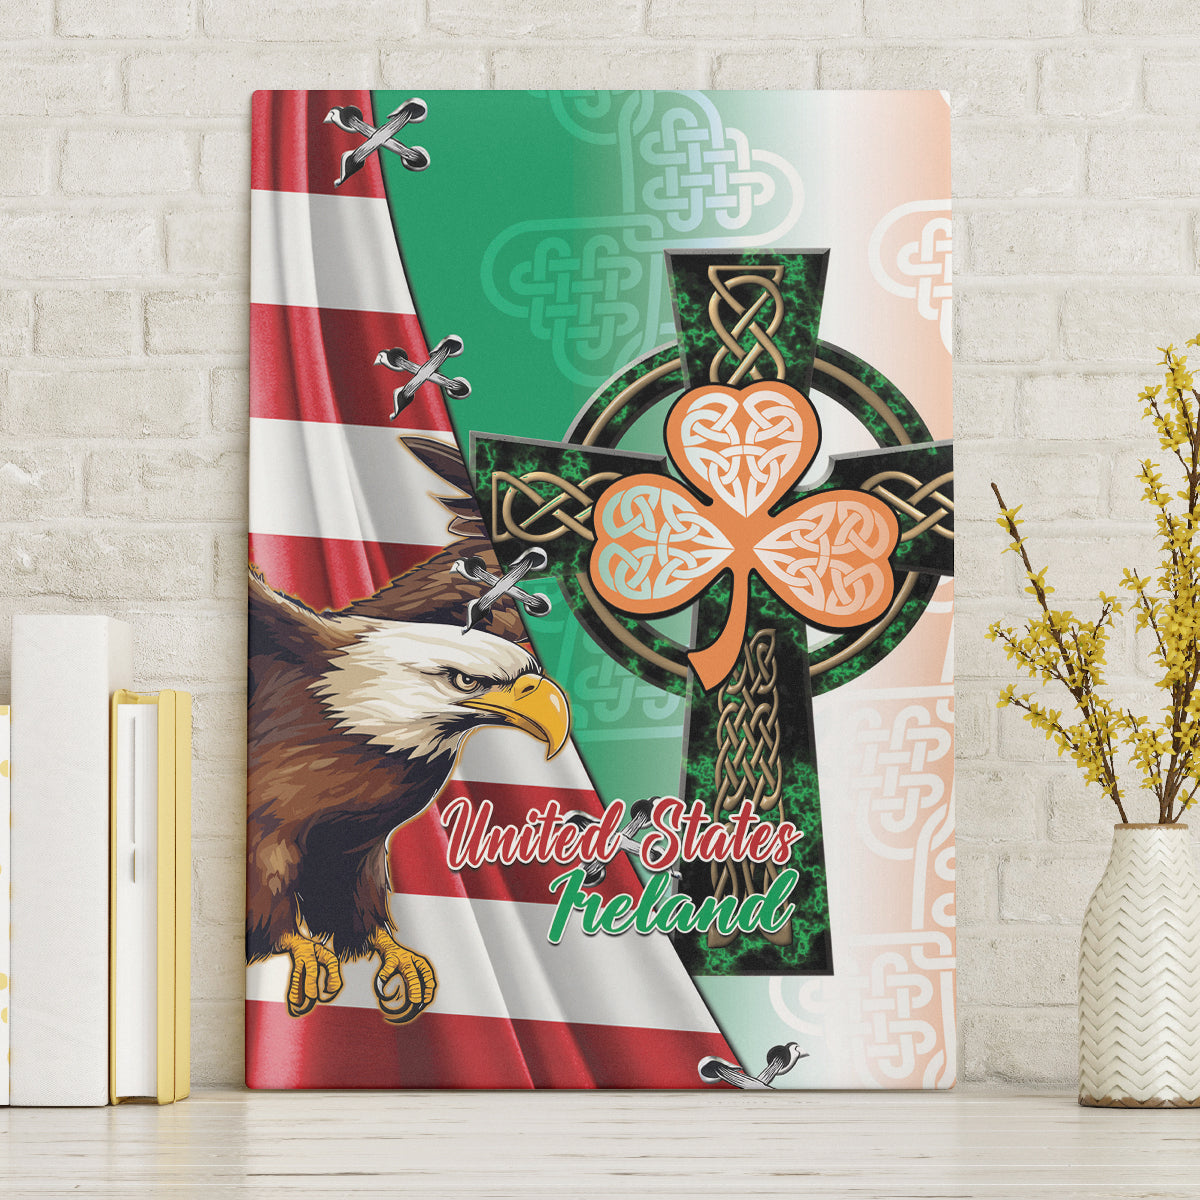 United States And Ireland Canvas Wall Art USA Eagle With Irish Celtic Cross